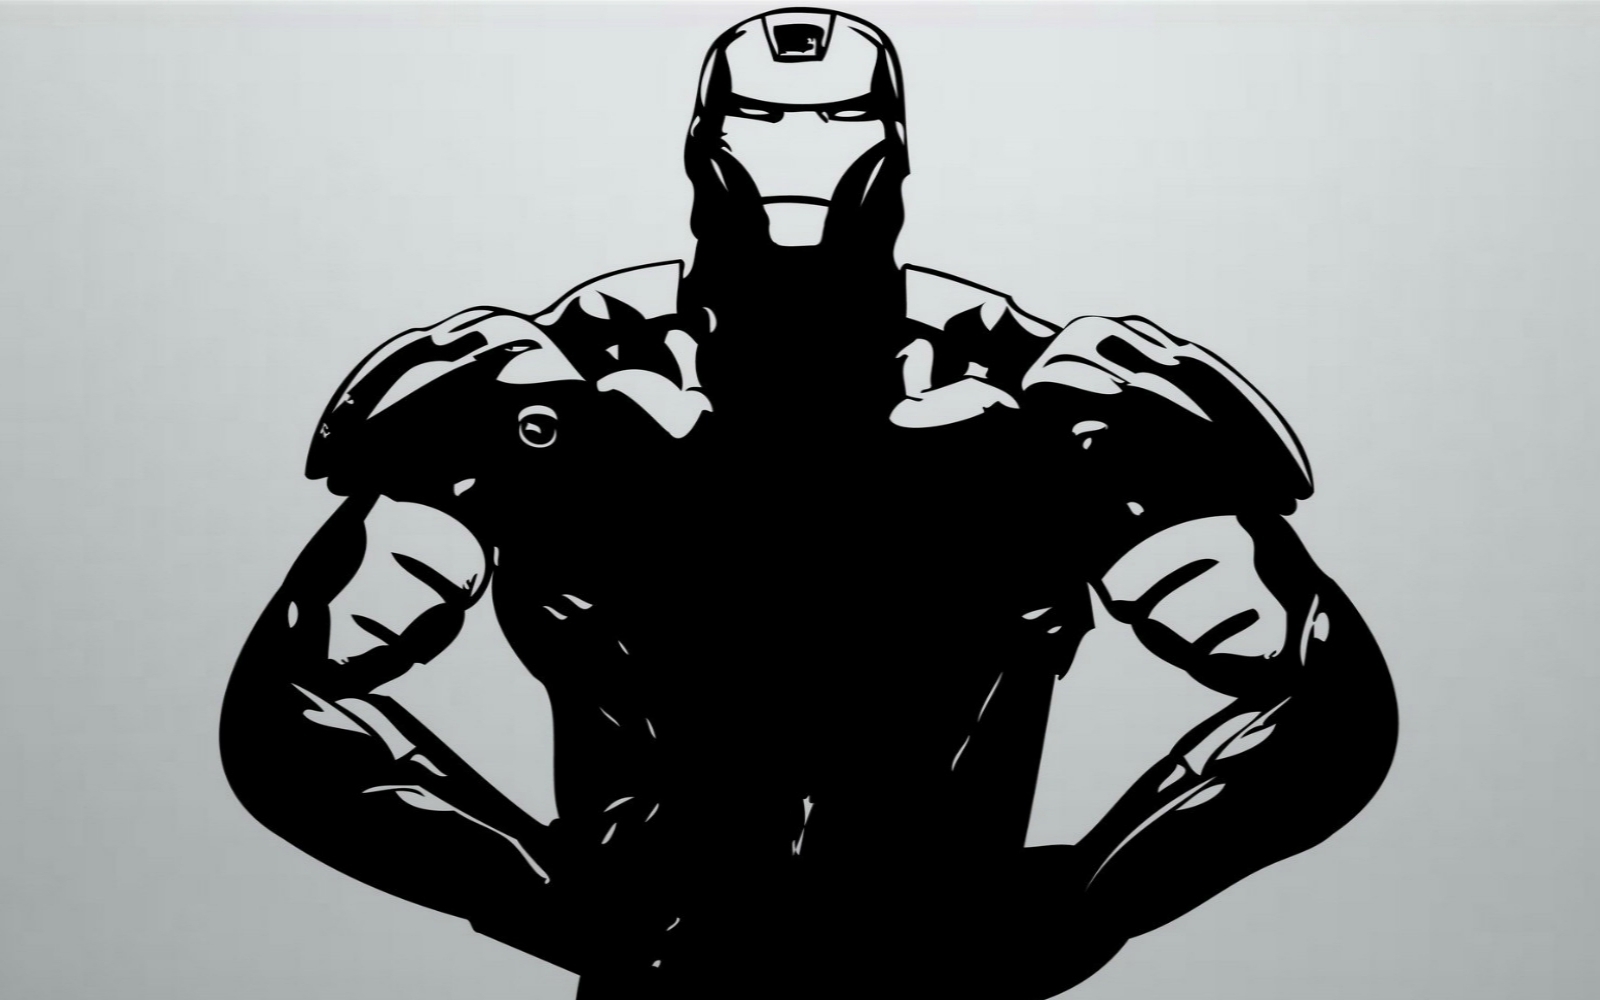 black and white iron man wallpaper